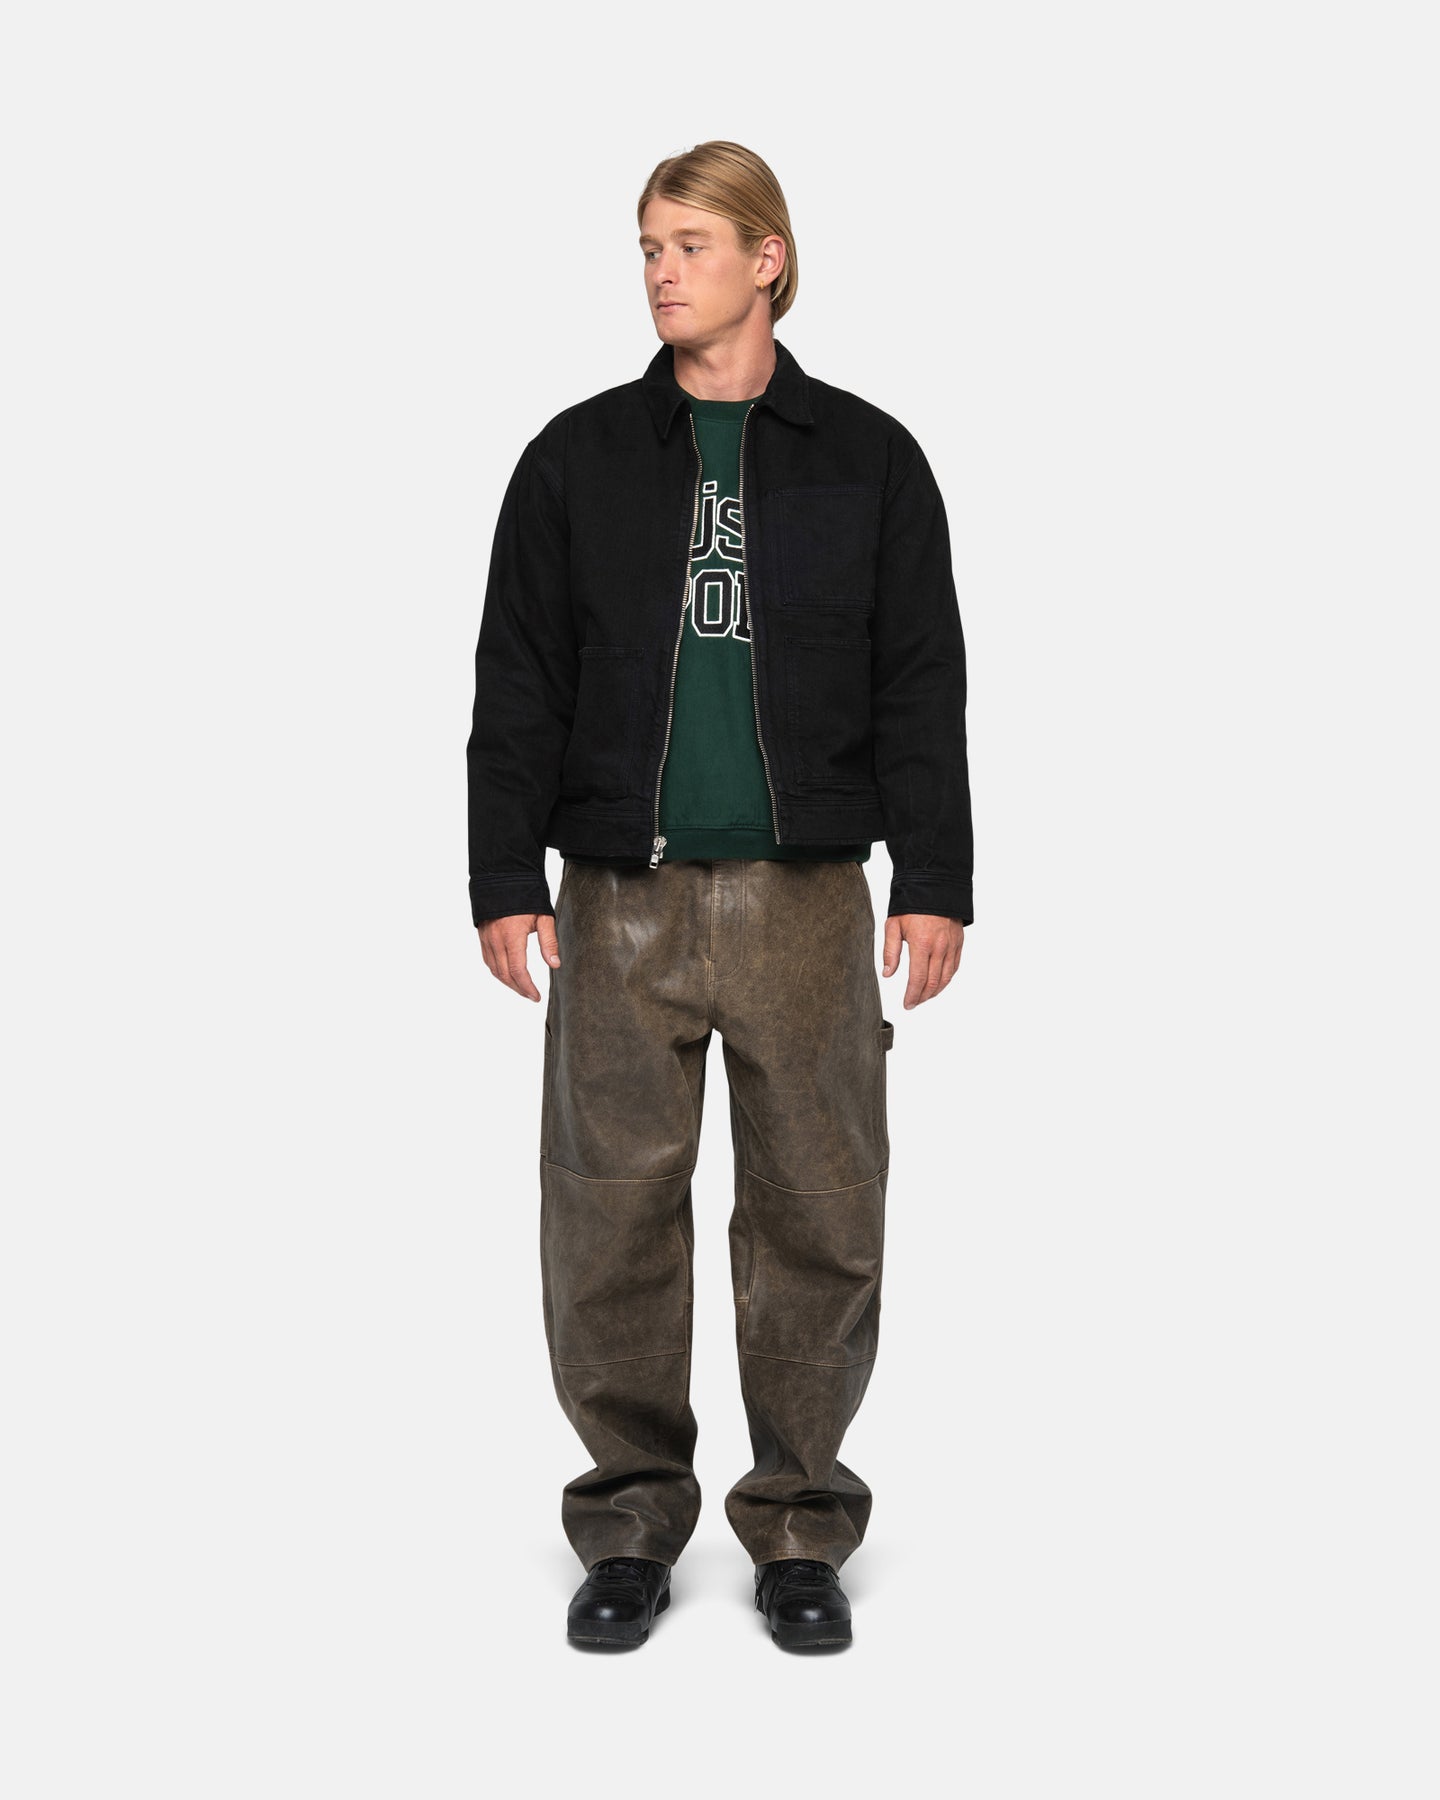 Zip Work Jacket Overdyed - Unisex Jackets & Outerwear | Stüssy